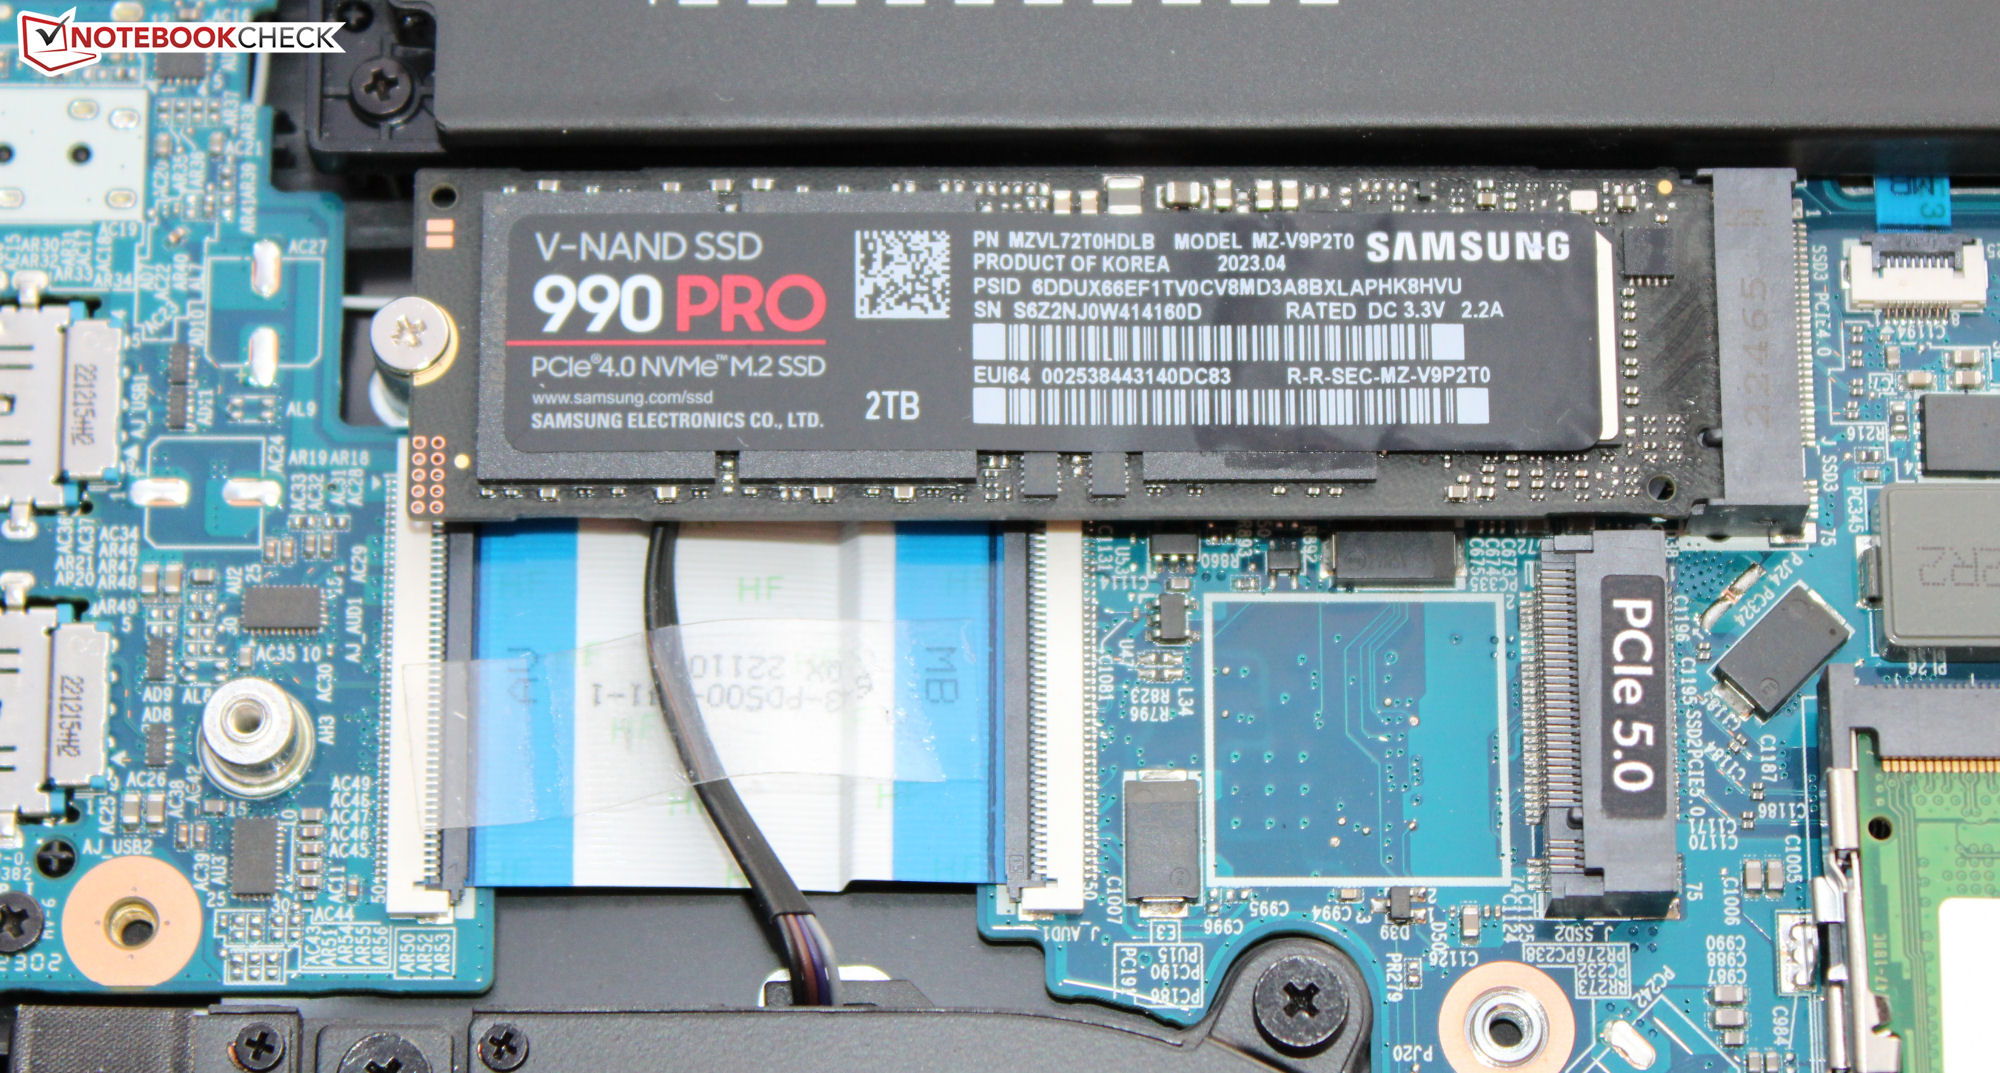 Smasung 990 Pro 2 TB MZVL72T0HDLB SSD Benchmarks -  Tech